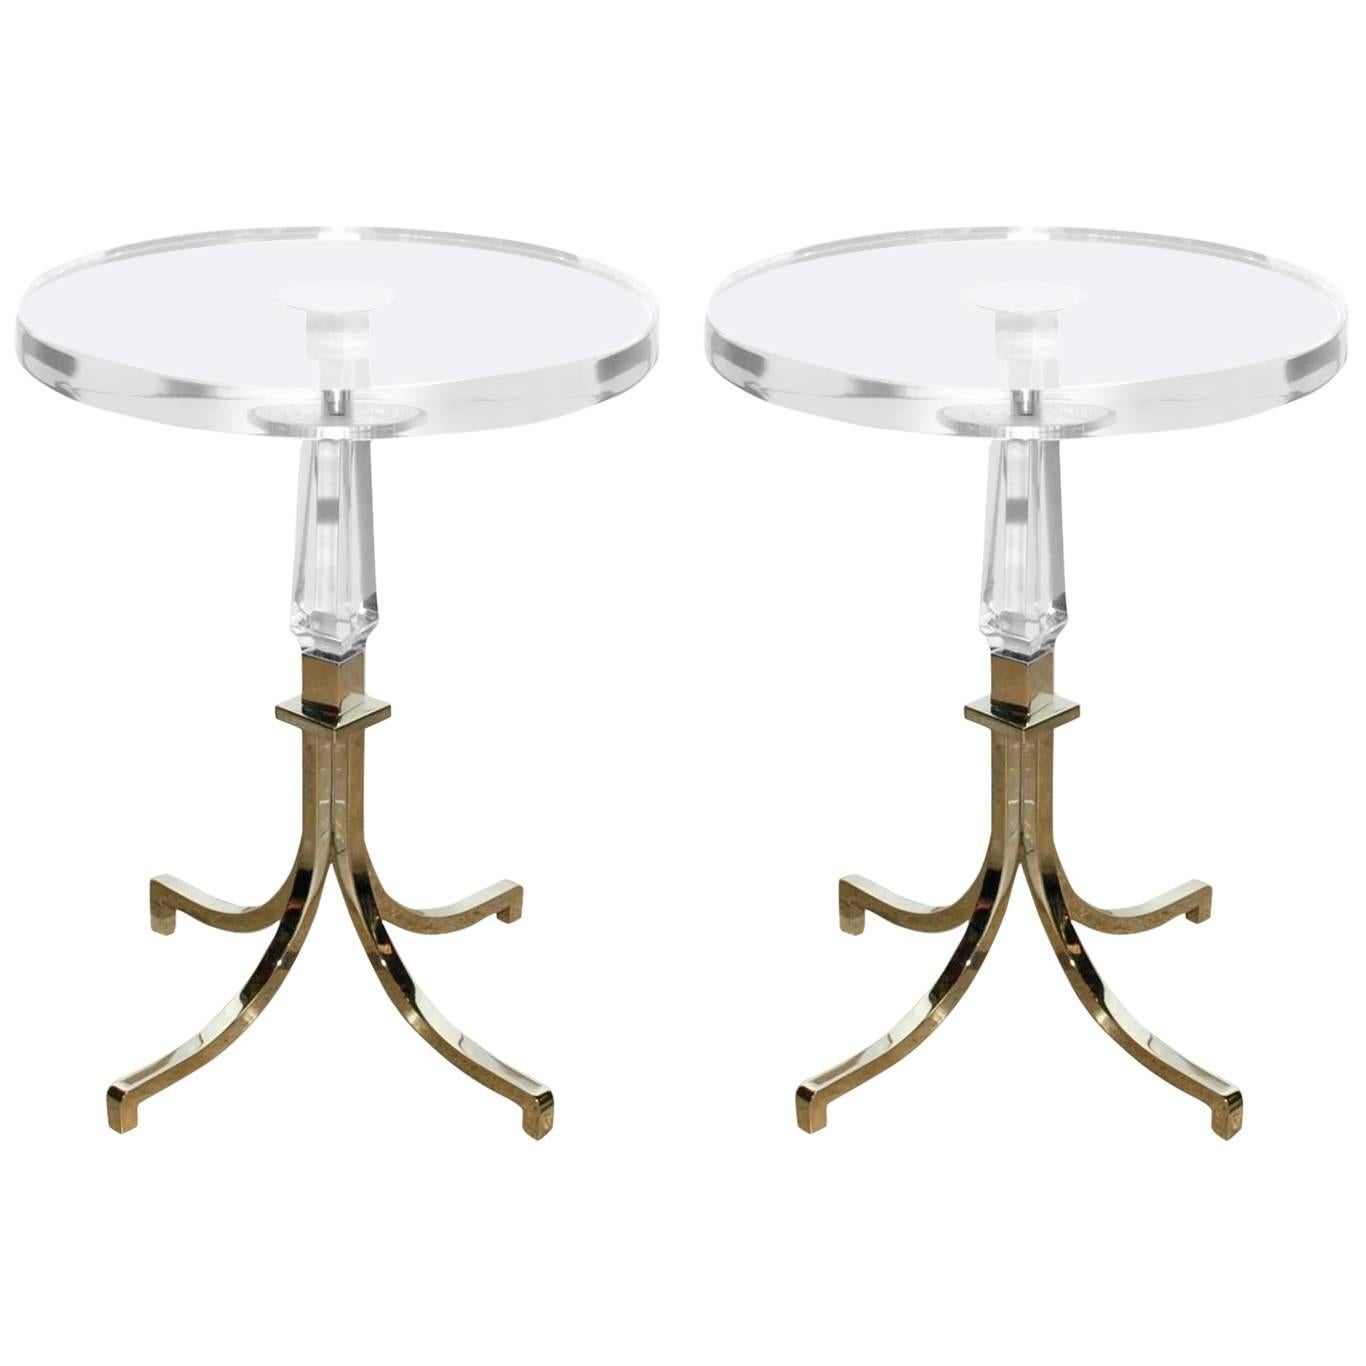 Pair of Regency Style Lucite and Nickel Side Tables by Charles Hollis Jones